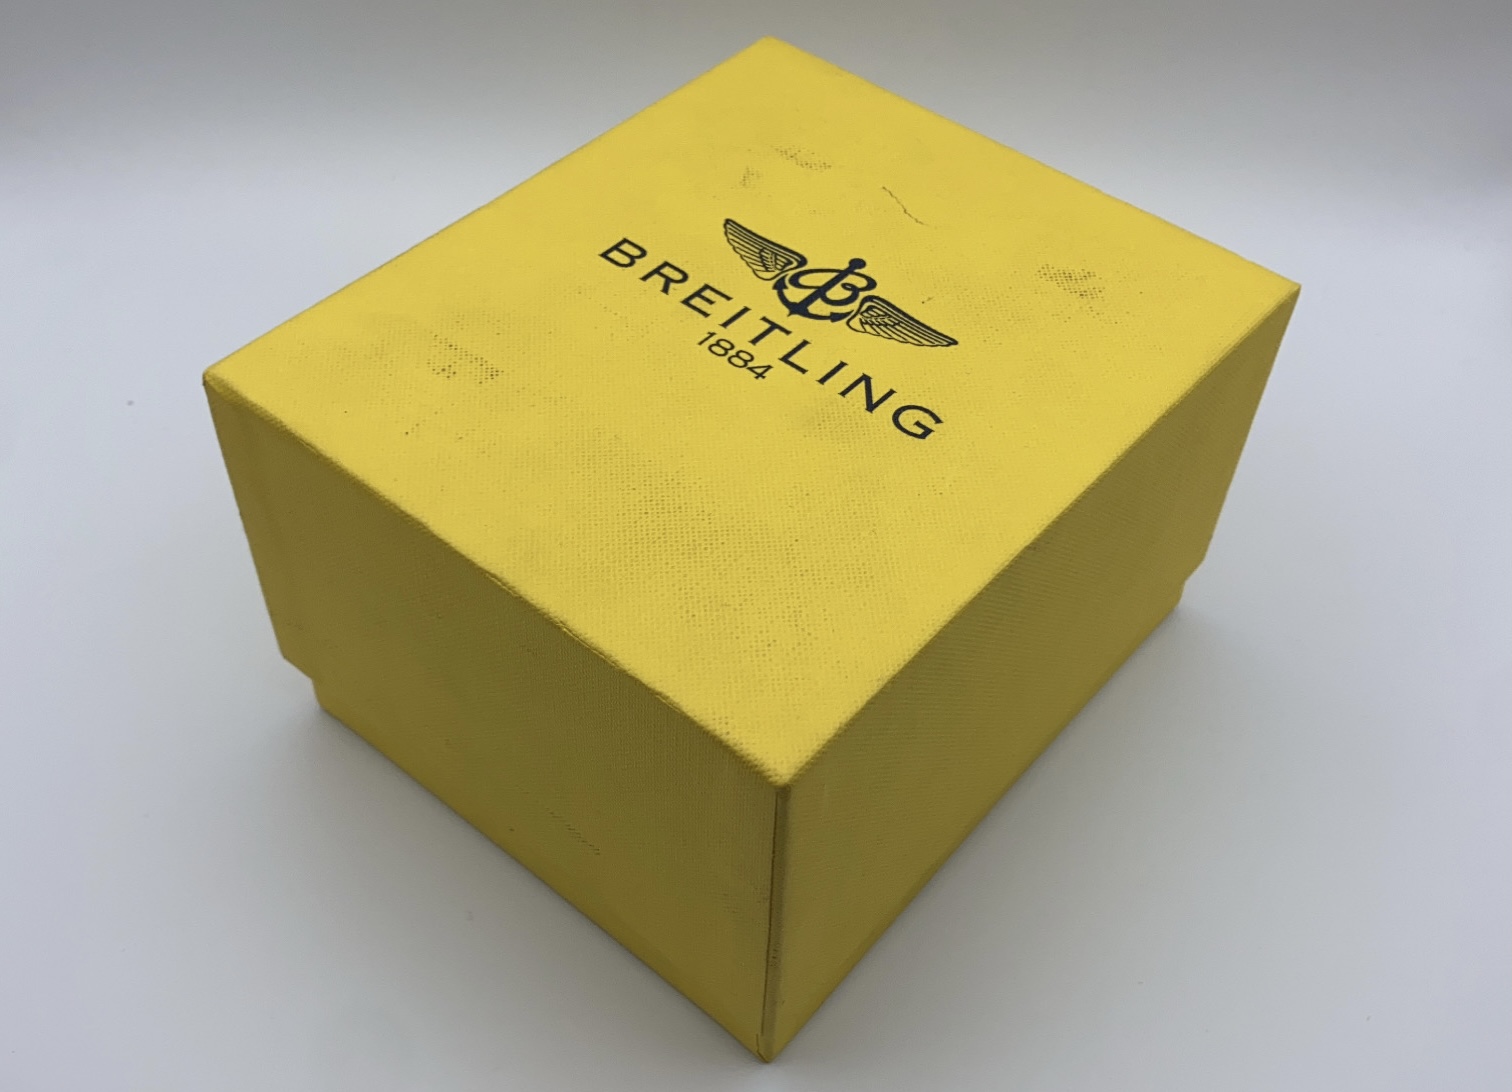 Breitling Navitimer Airborne Chronograph 18K Gold Automatik - K33030